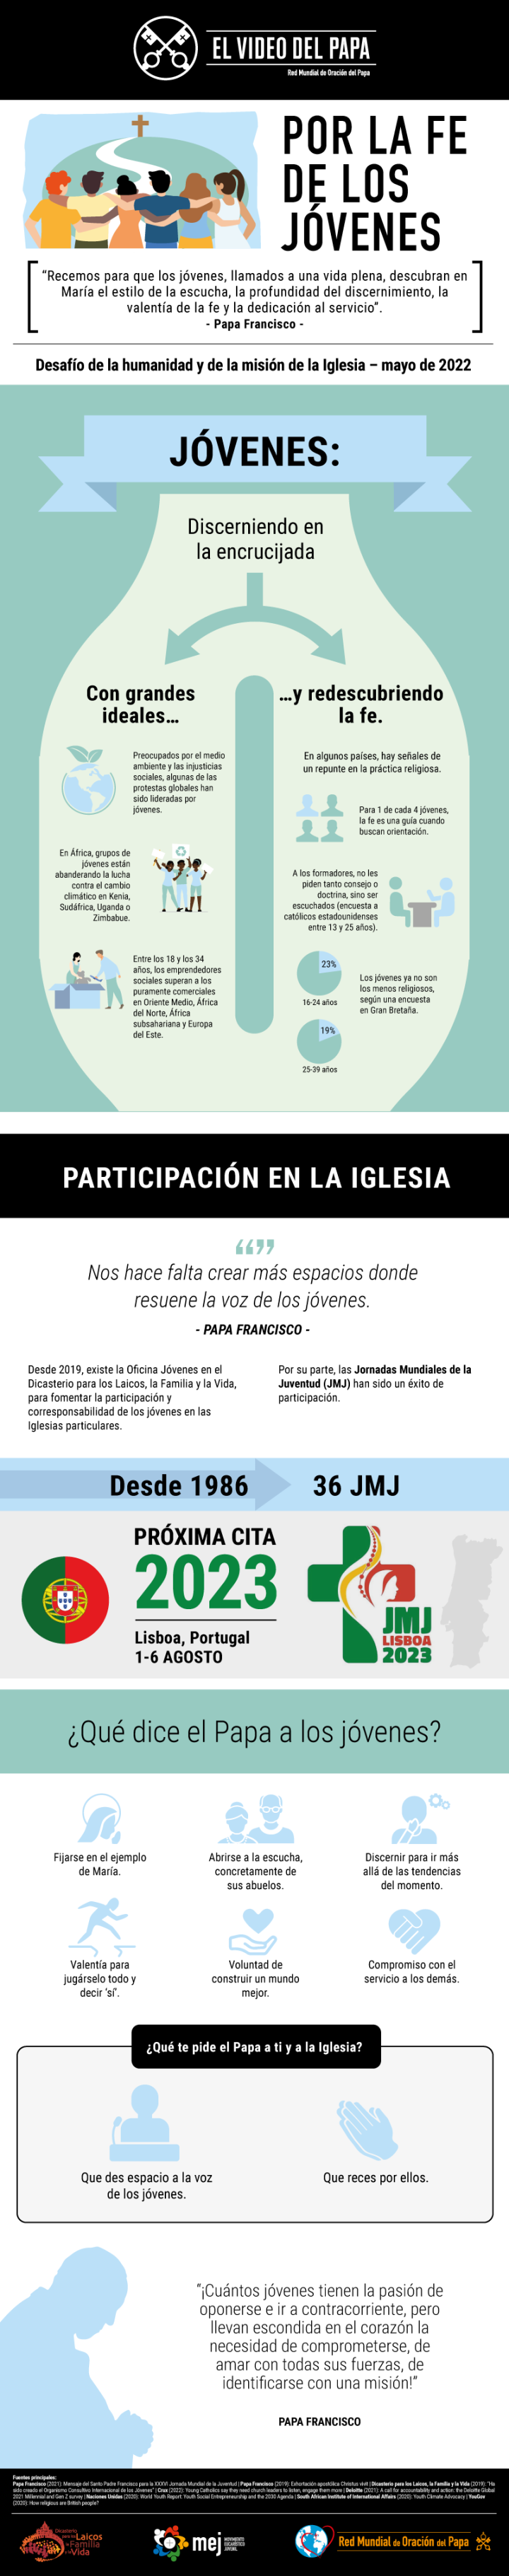 Infographic-TPV-5-2022-ES-Por-la-fe-de-los-jóvenes.png